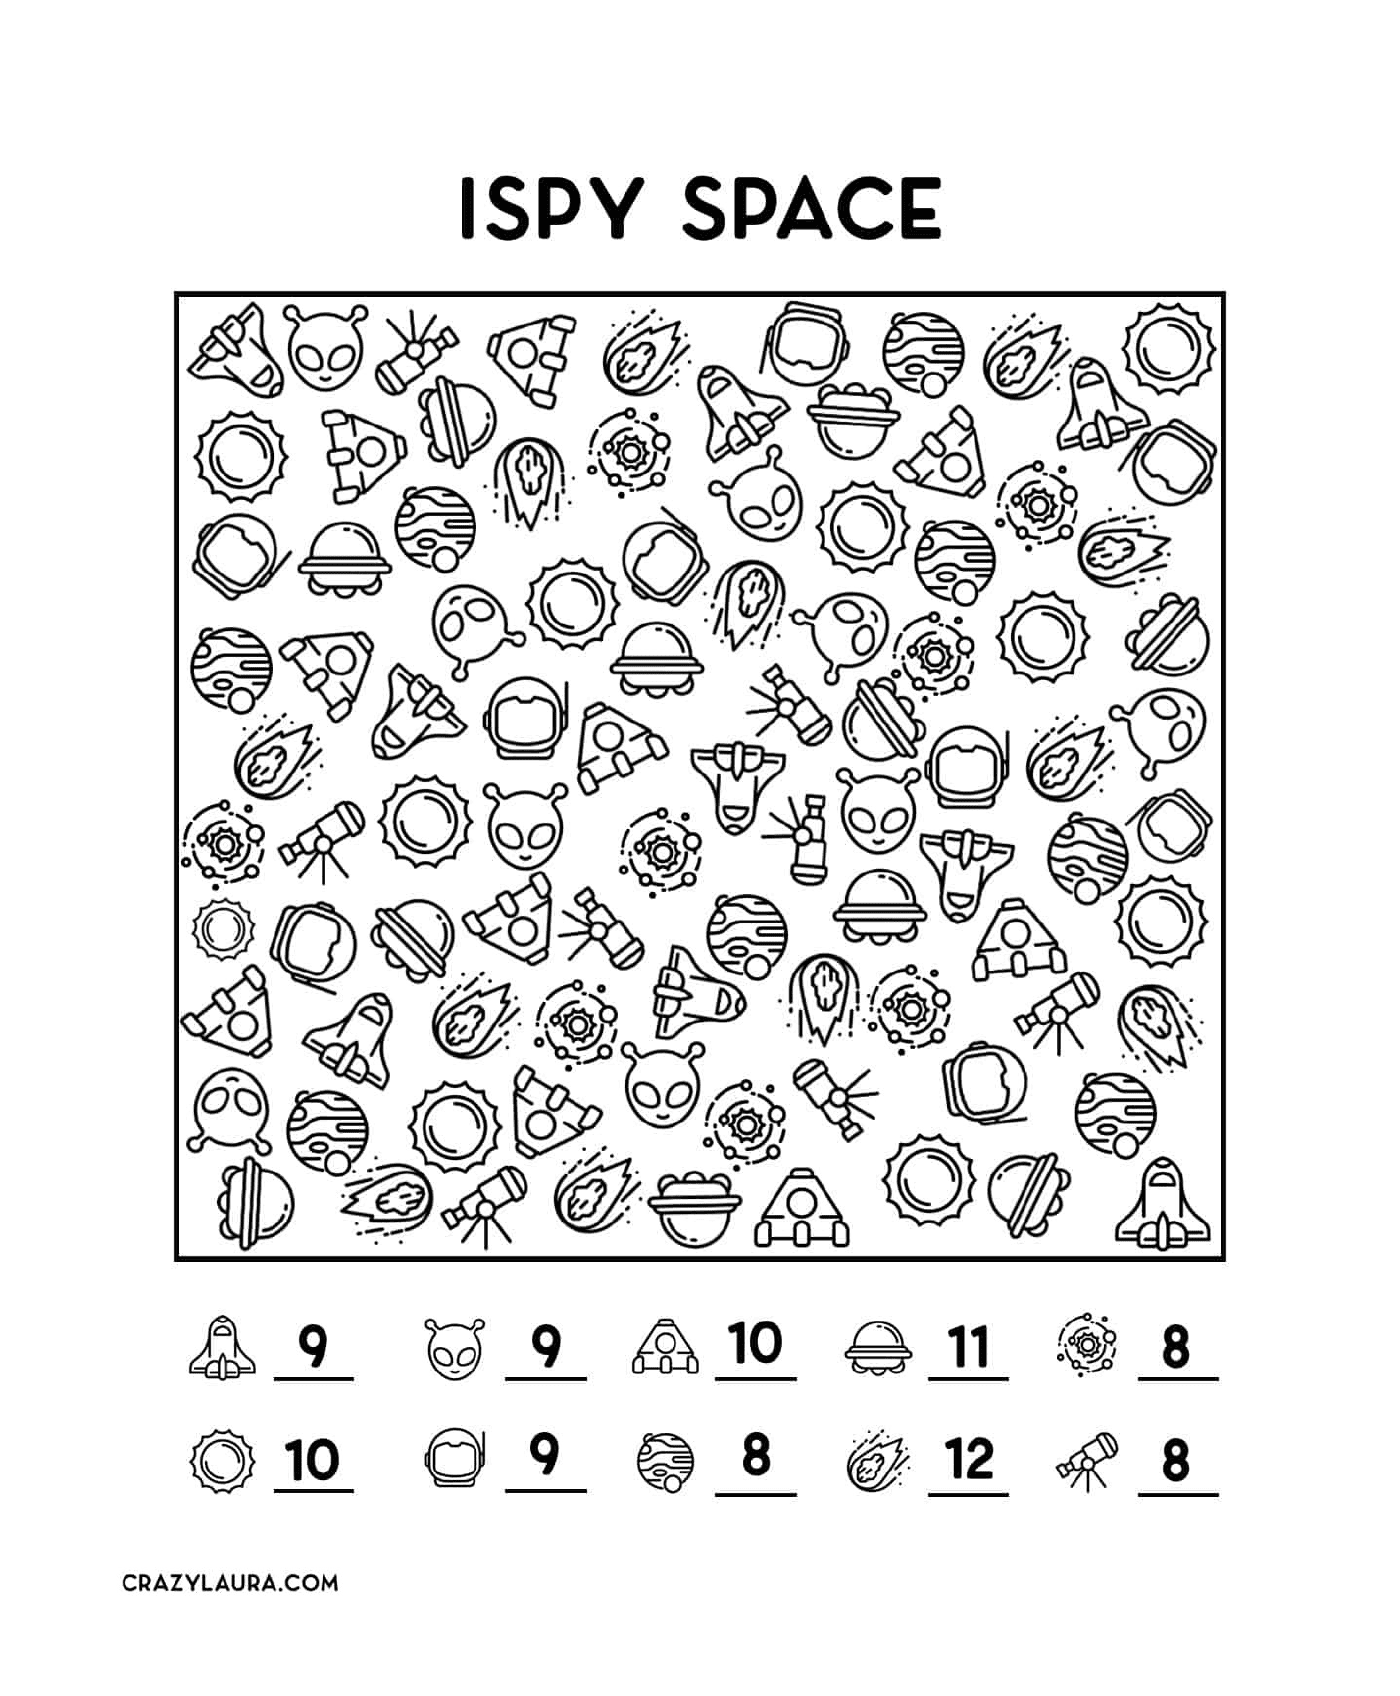  Aspy Space chols 